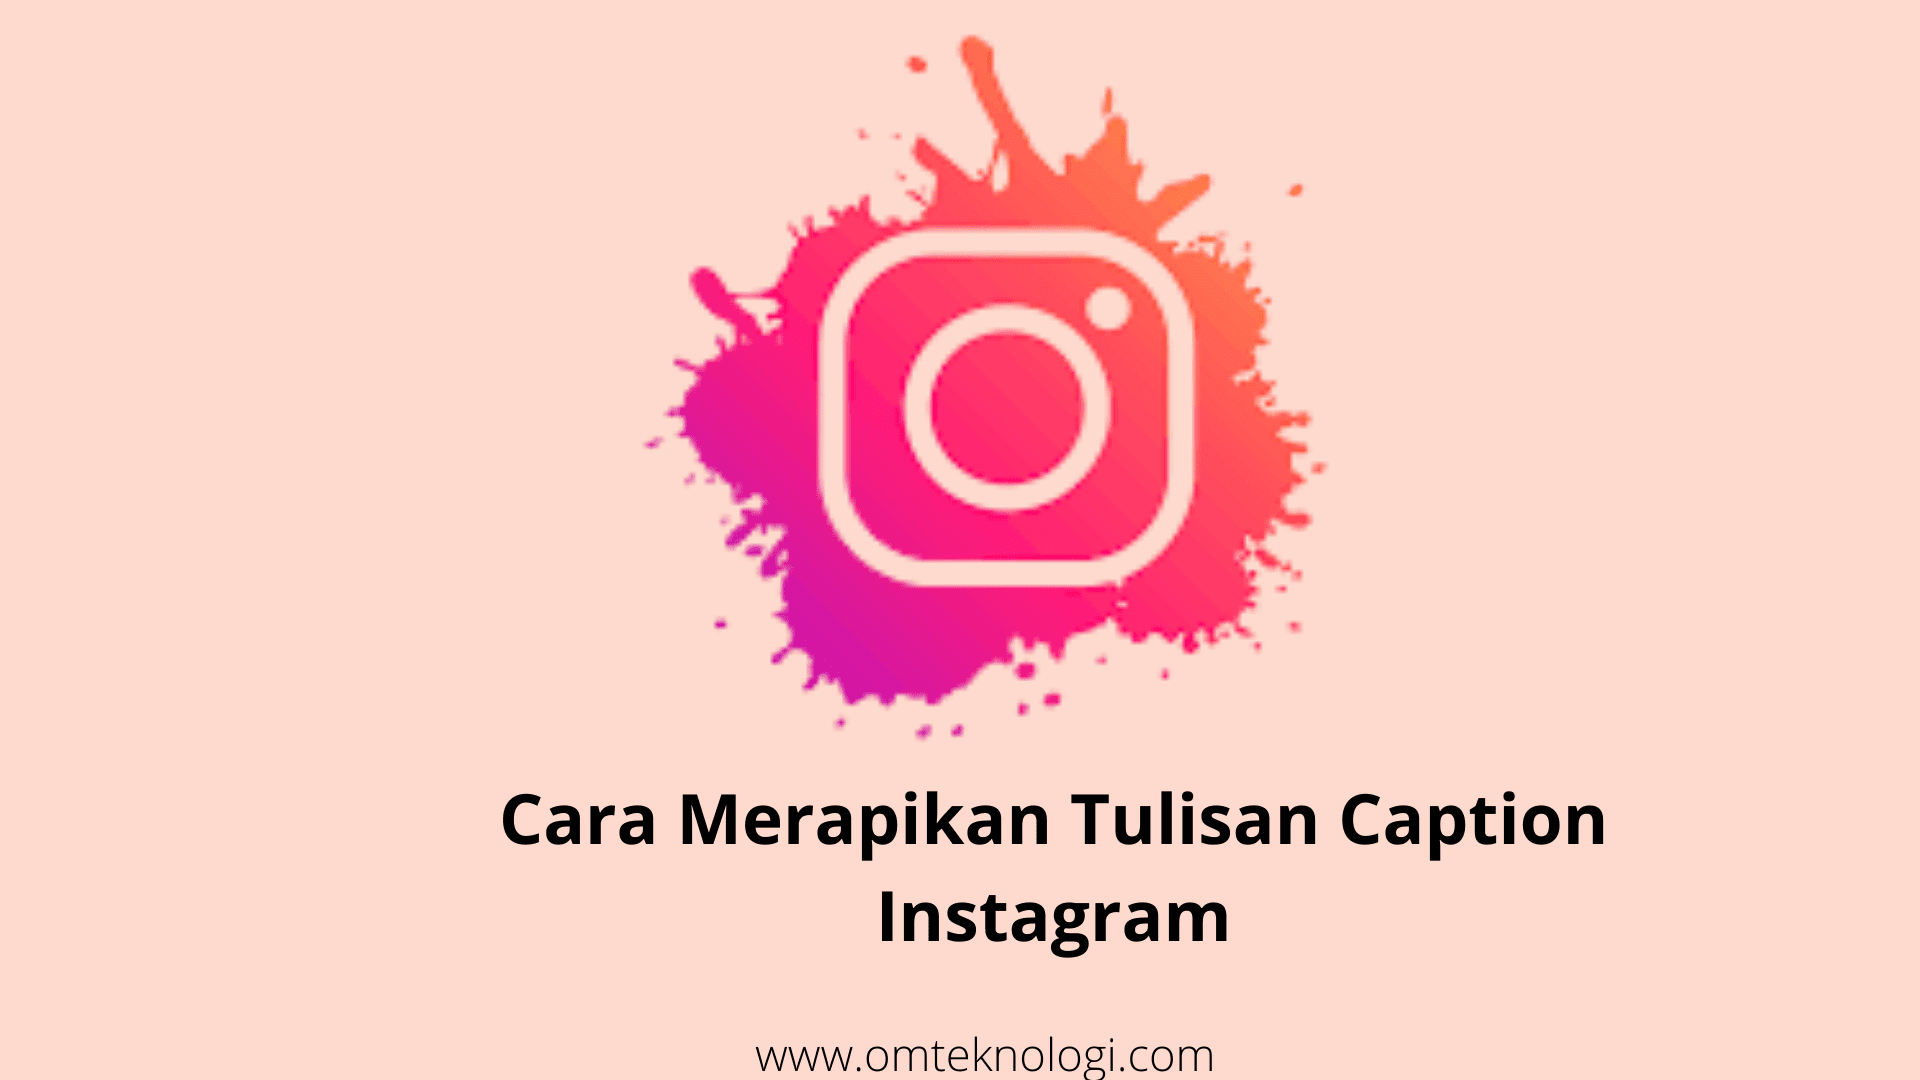 47+ Cara merapikan caption instagram ideas in 2021 